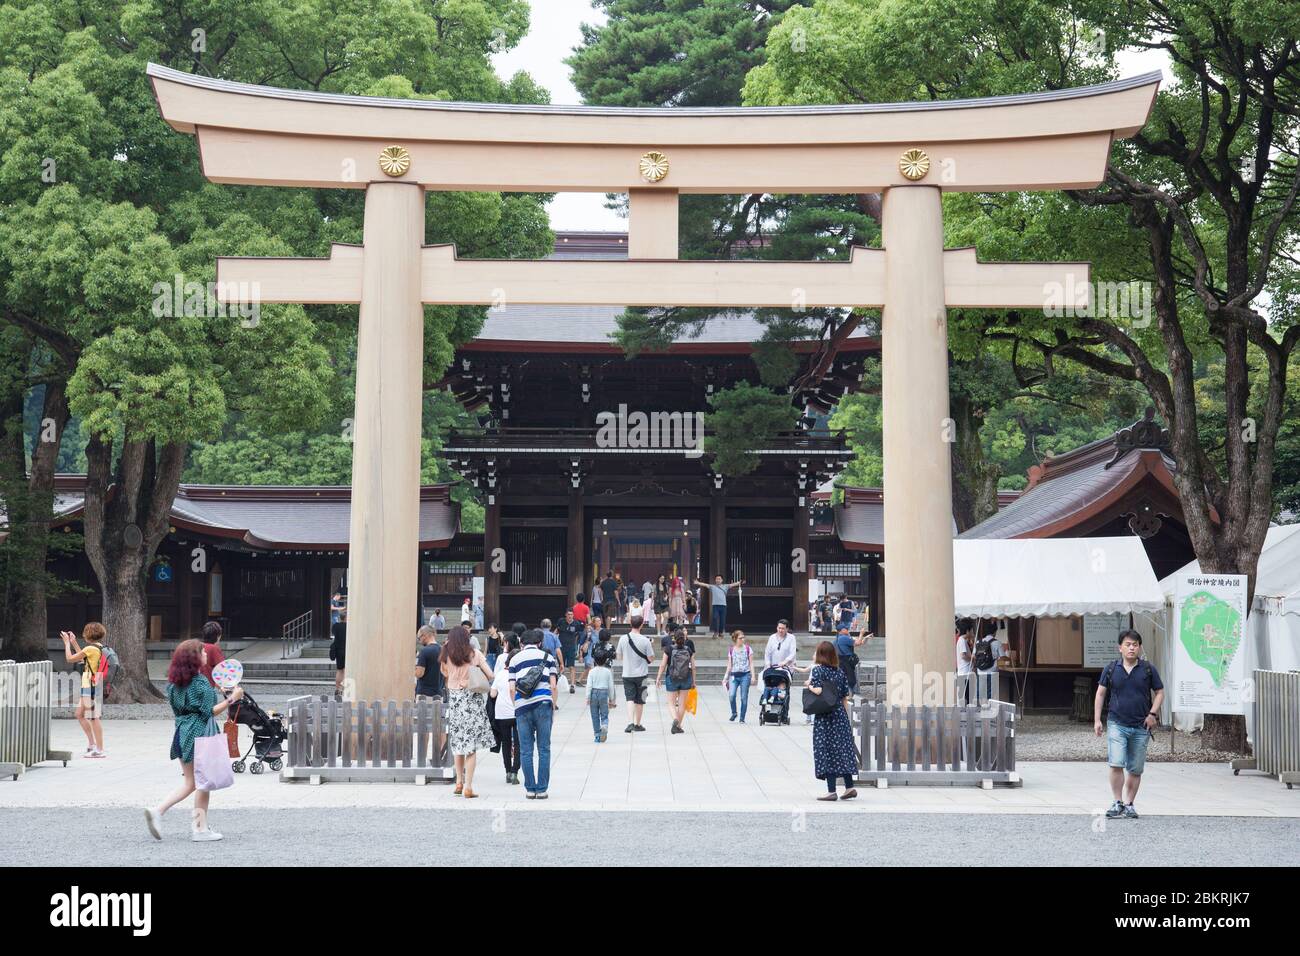 Giappone, Isola di Honshu, regione di Kanto, Tokyo, Shibuya uartier, Harajuku, tempio di Meiji Jingu, porta di legno di Torii Foto Stock